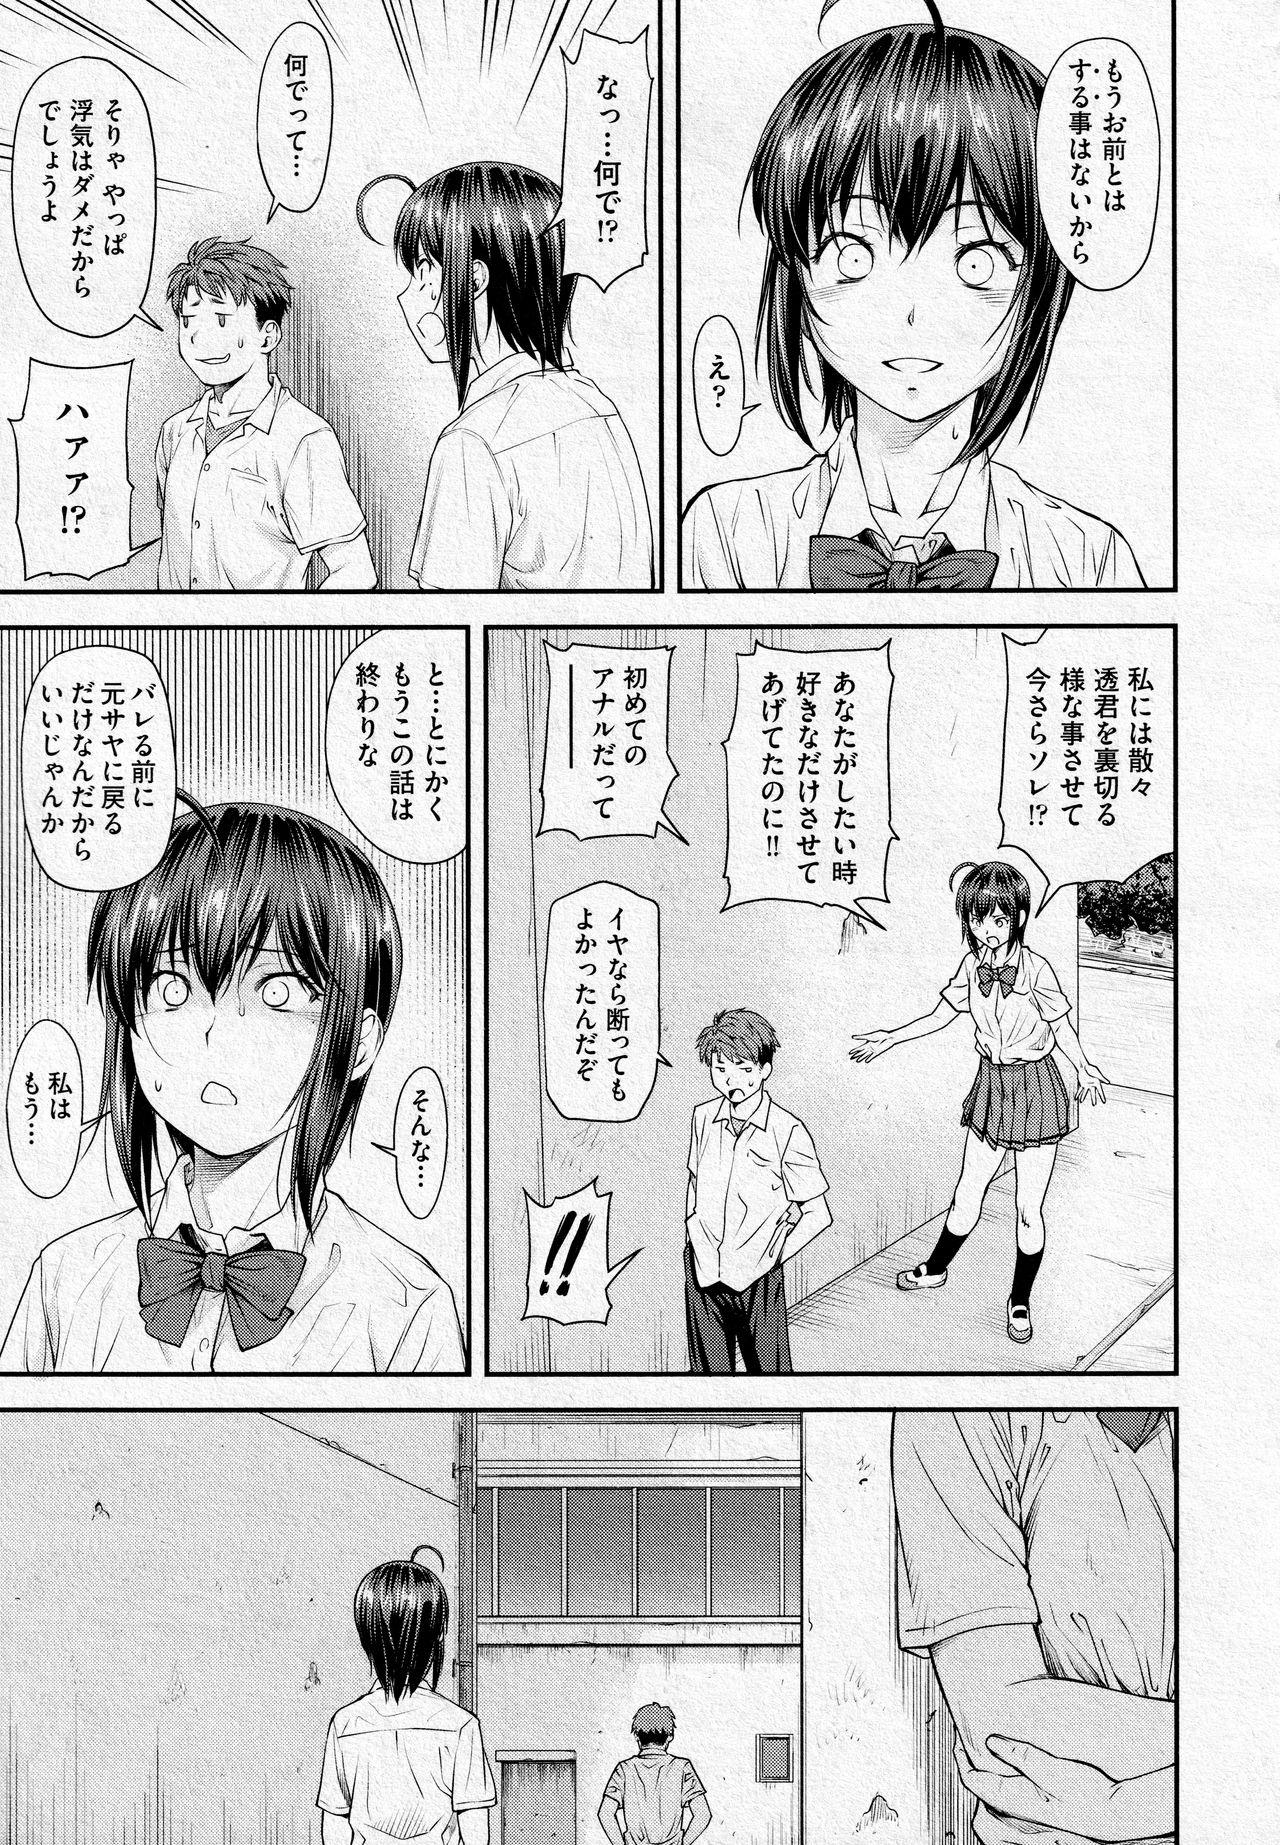 Tongue Kaname Date #13 Hunk - Page 5